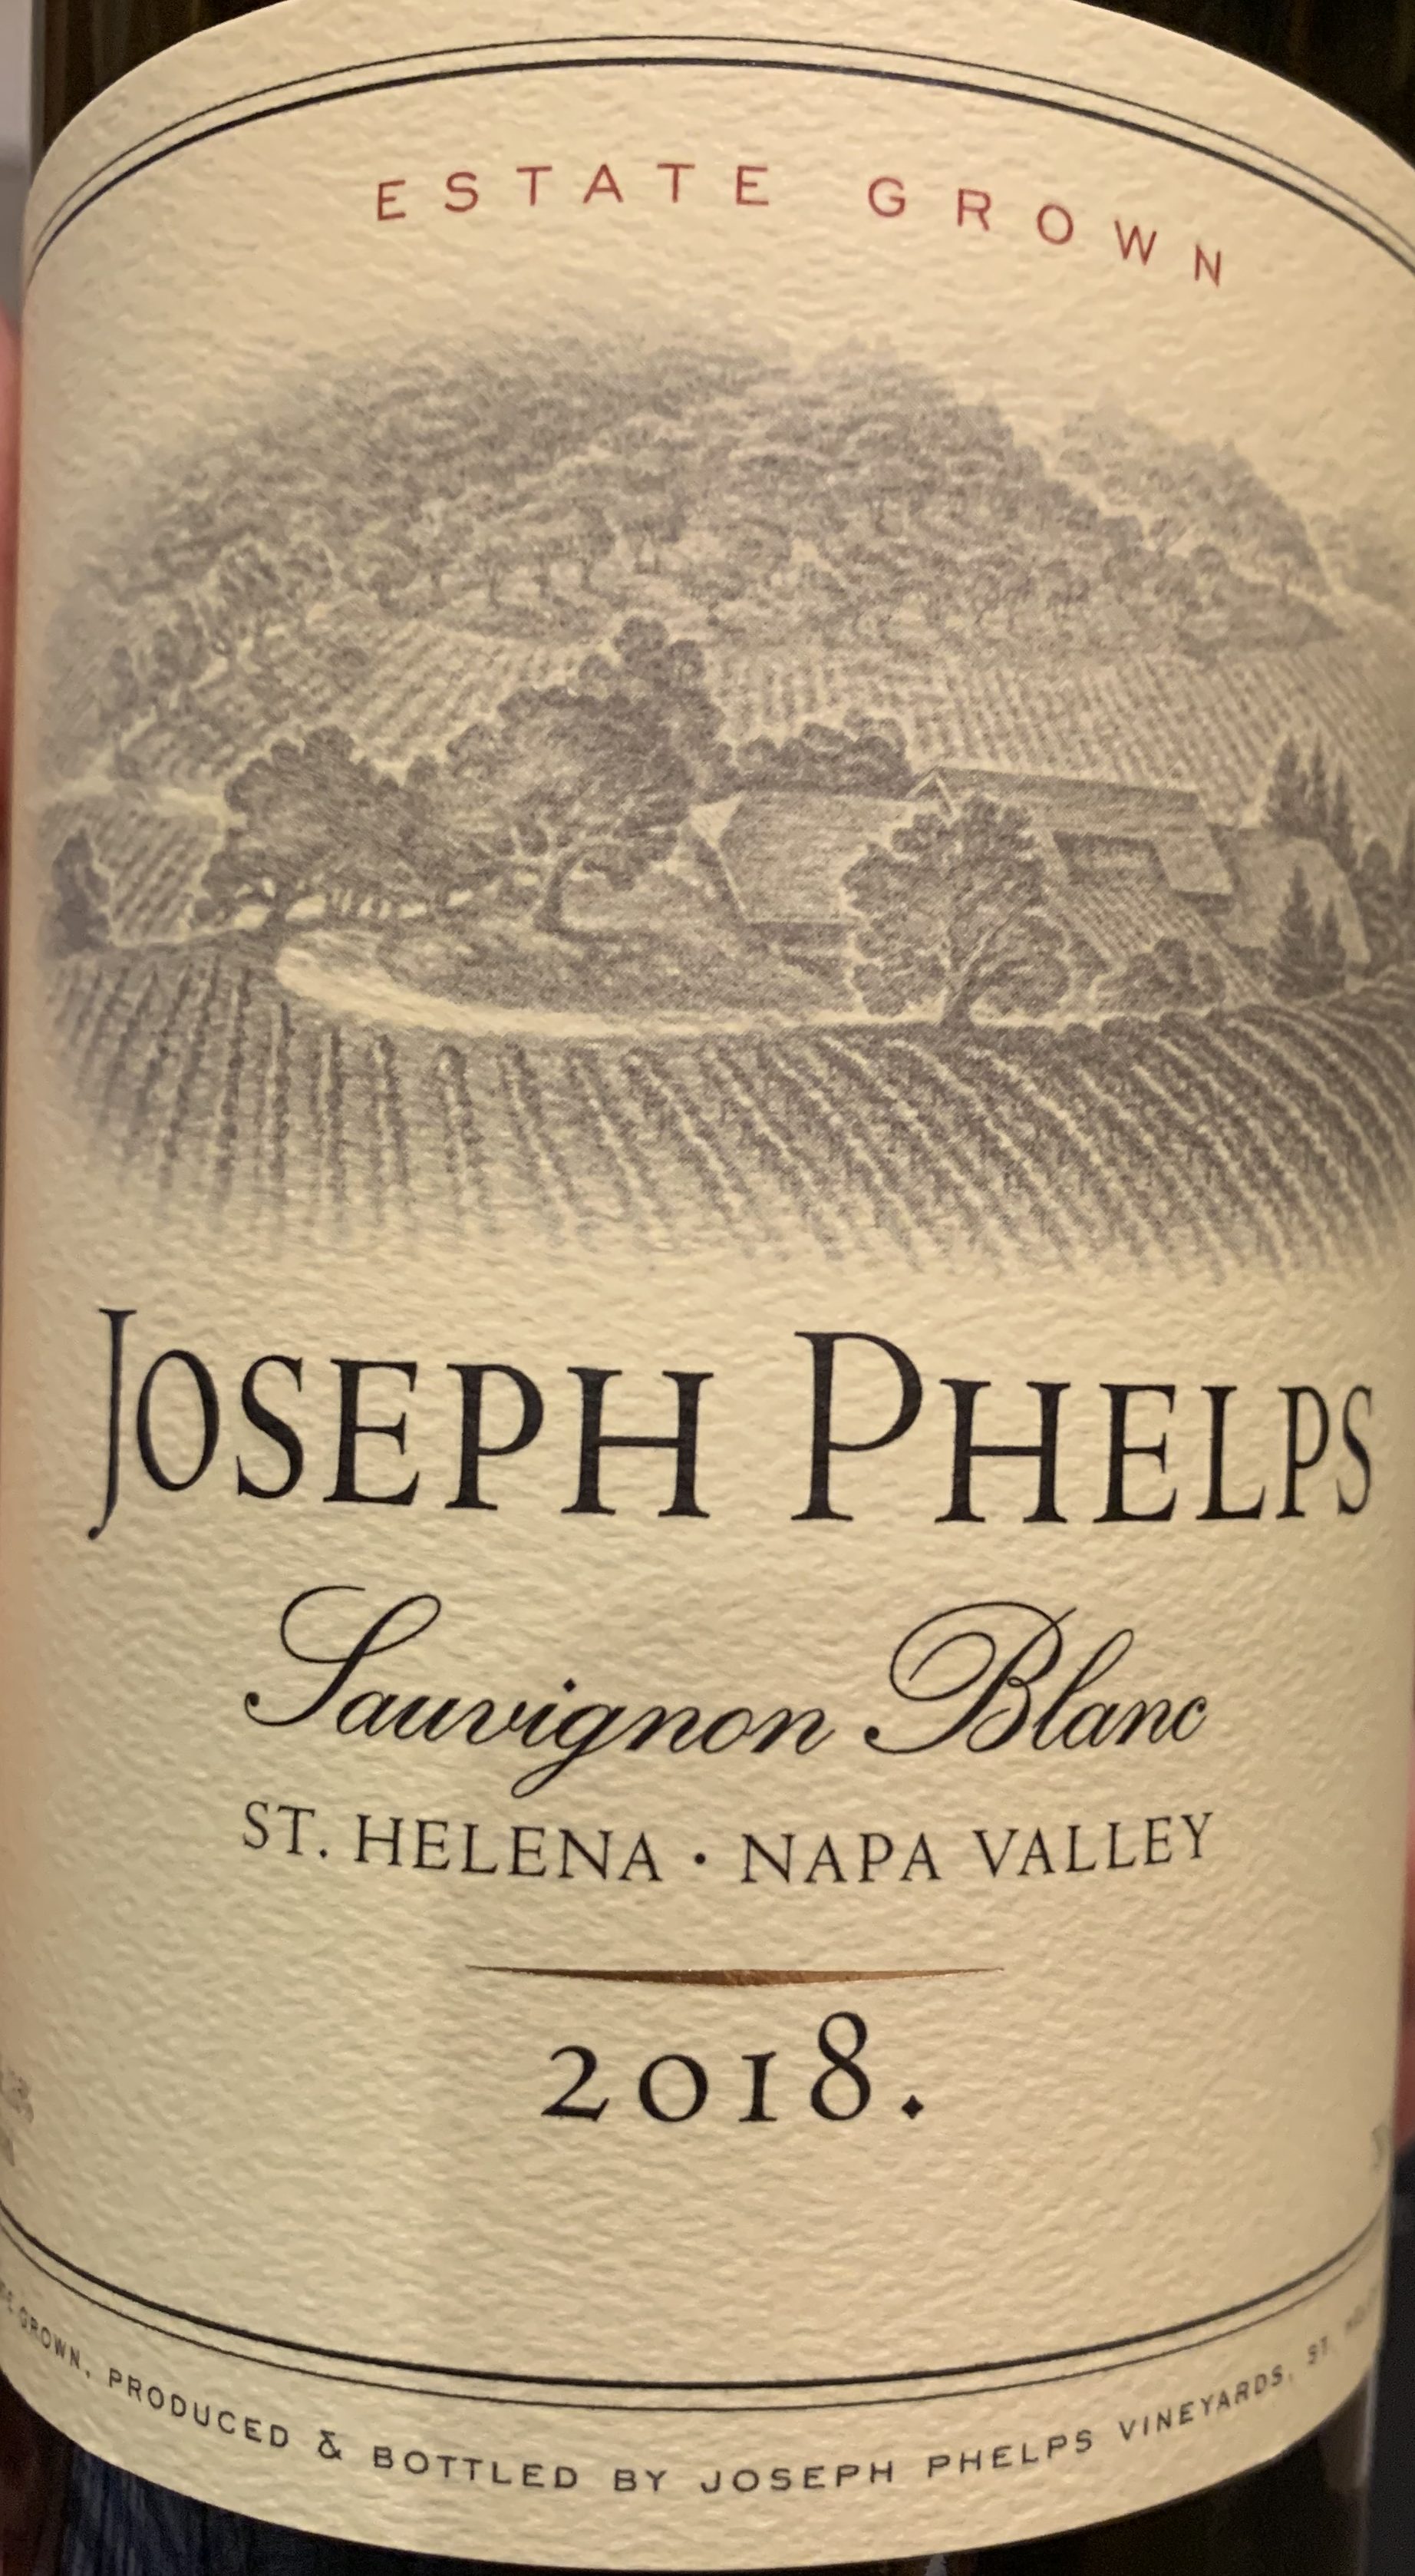 First Bottle - Wine - Joseph Phelps Backus Vineyard Napa Valley 1997